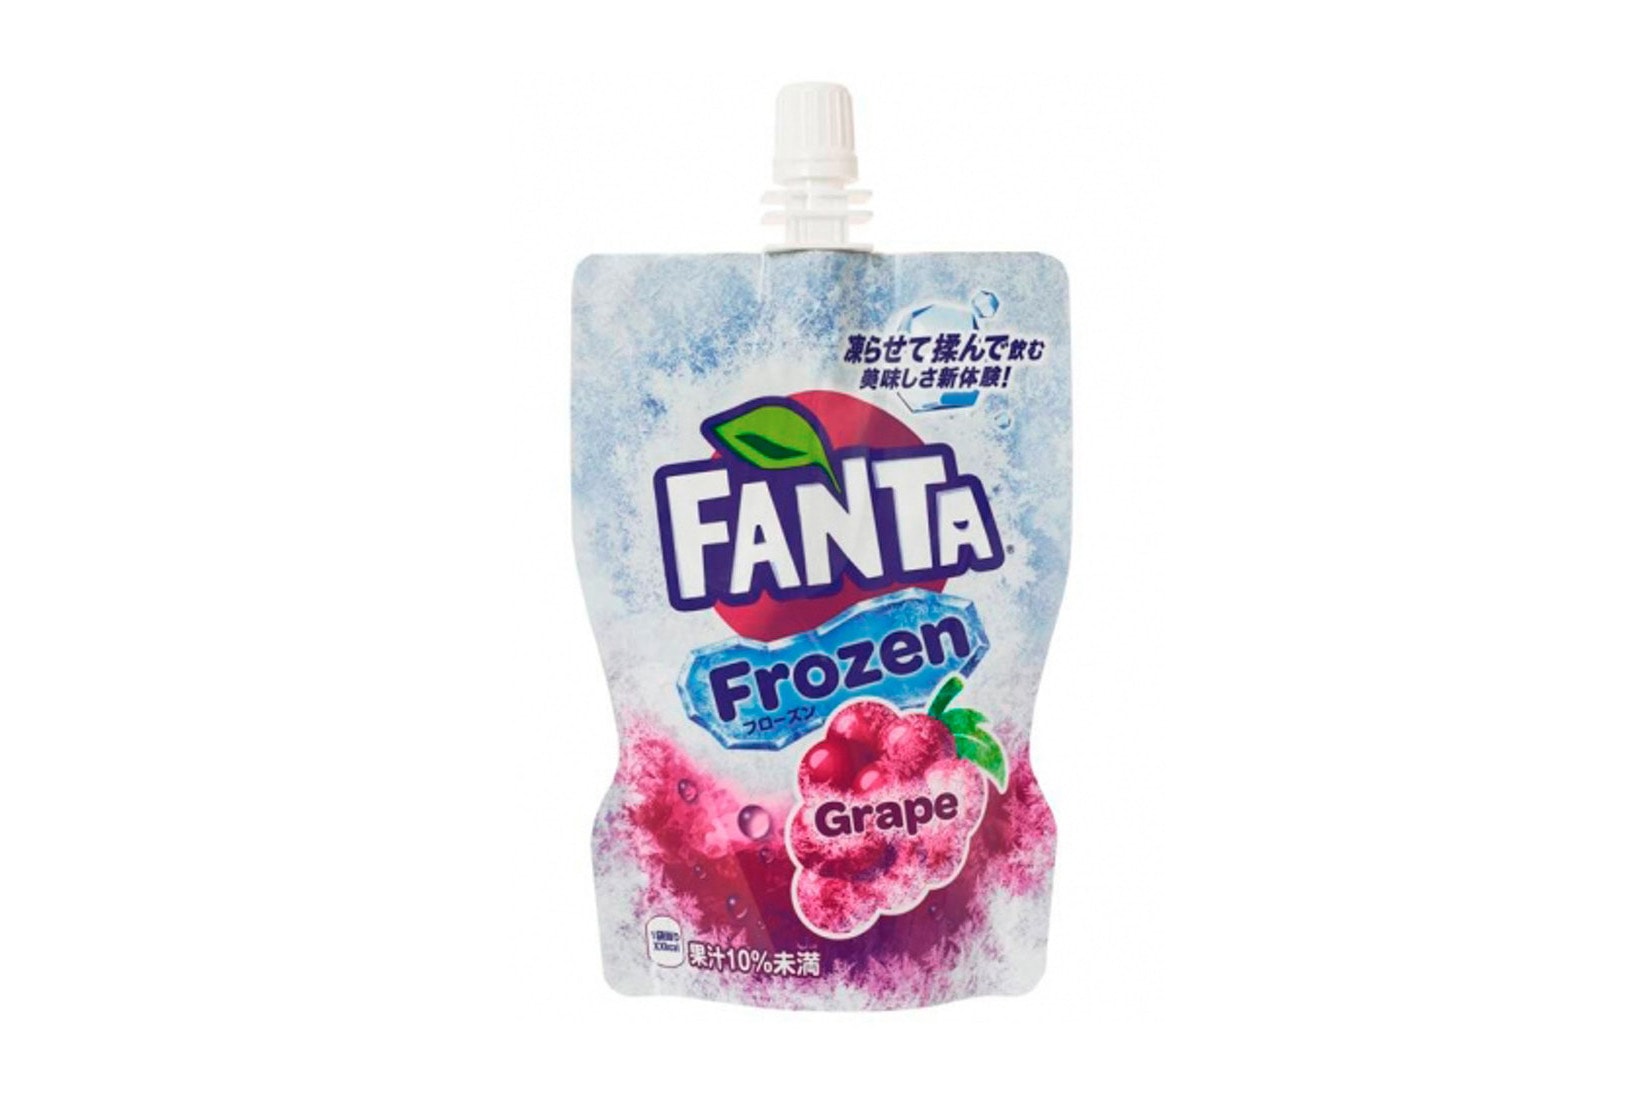 Coca-Cola 推出 Frozen Lemon Coke 及 Fanta 汽水口味「冰沙」